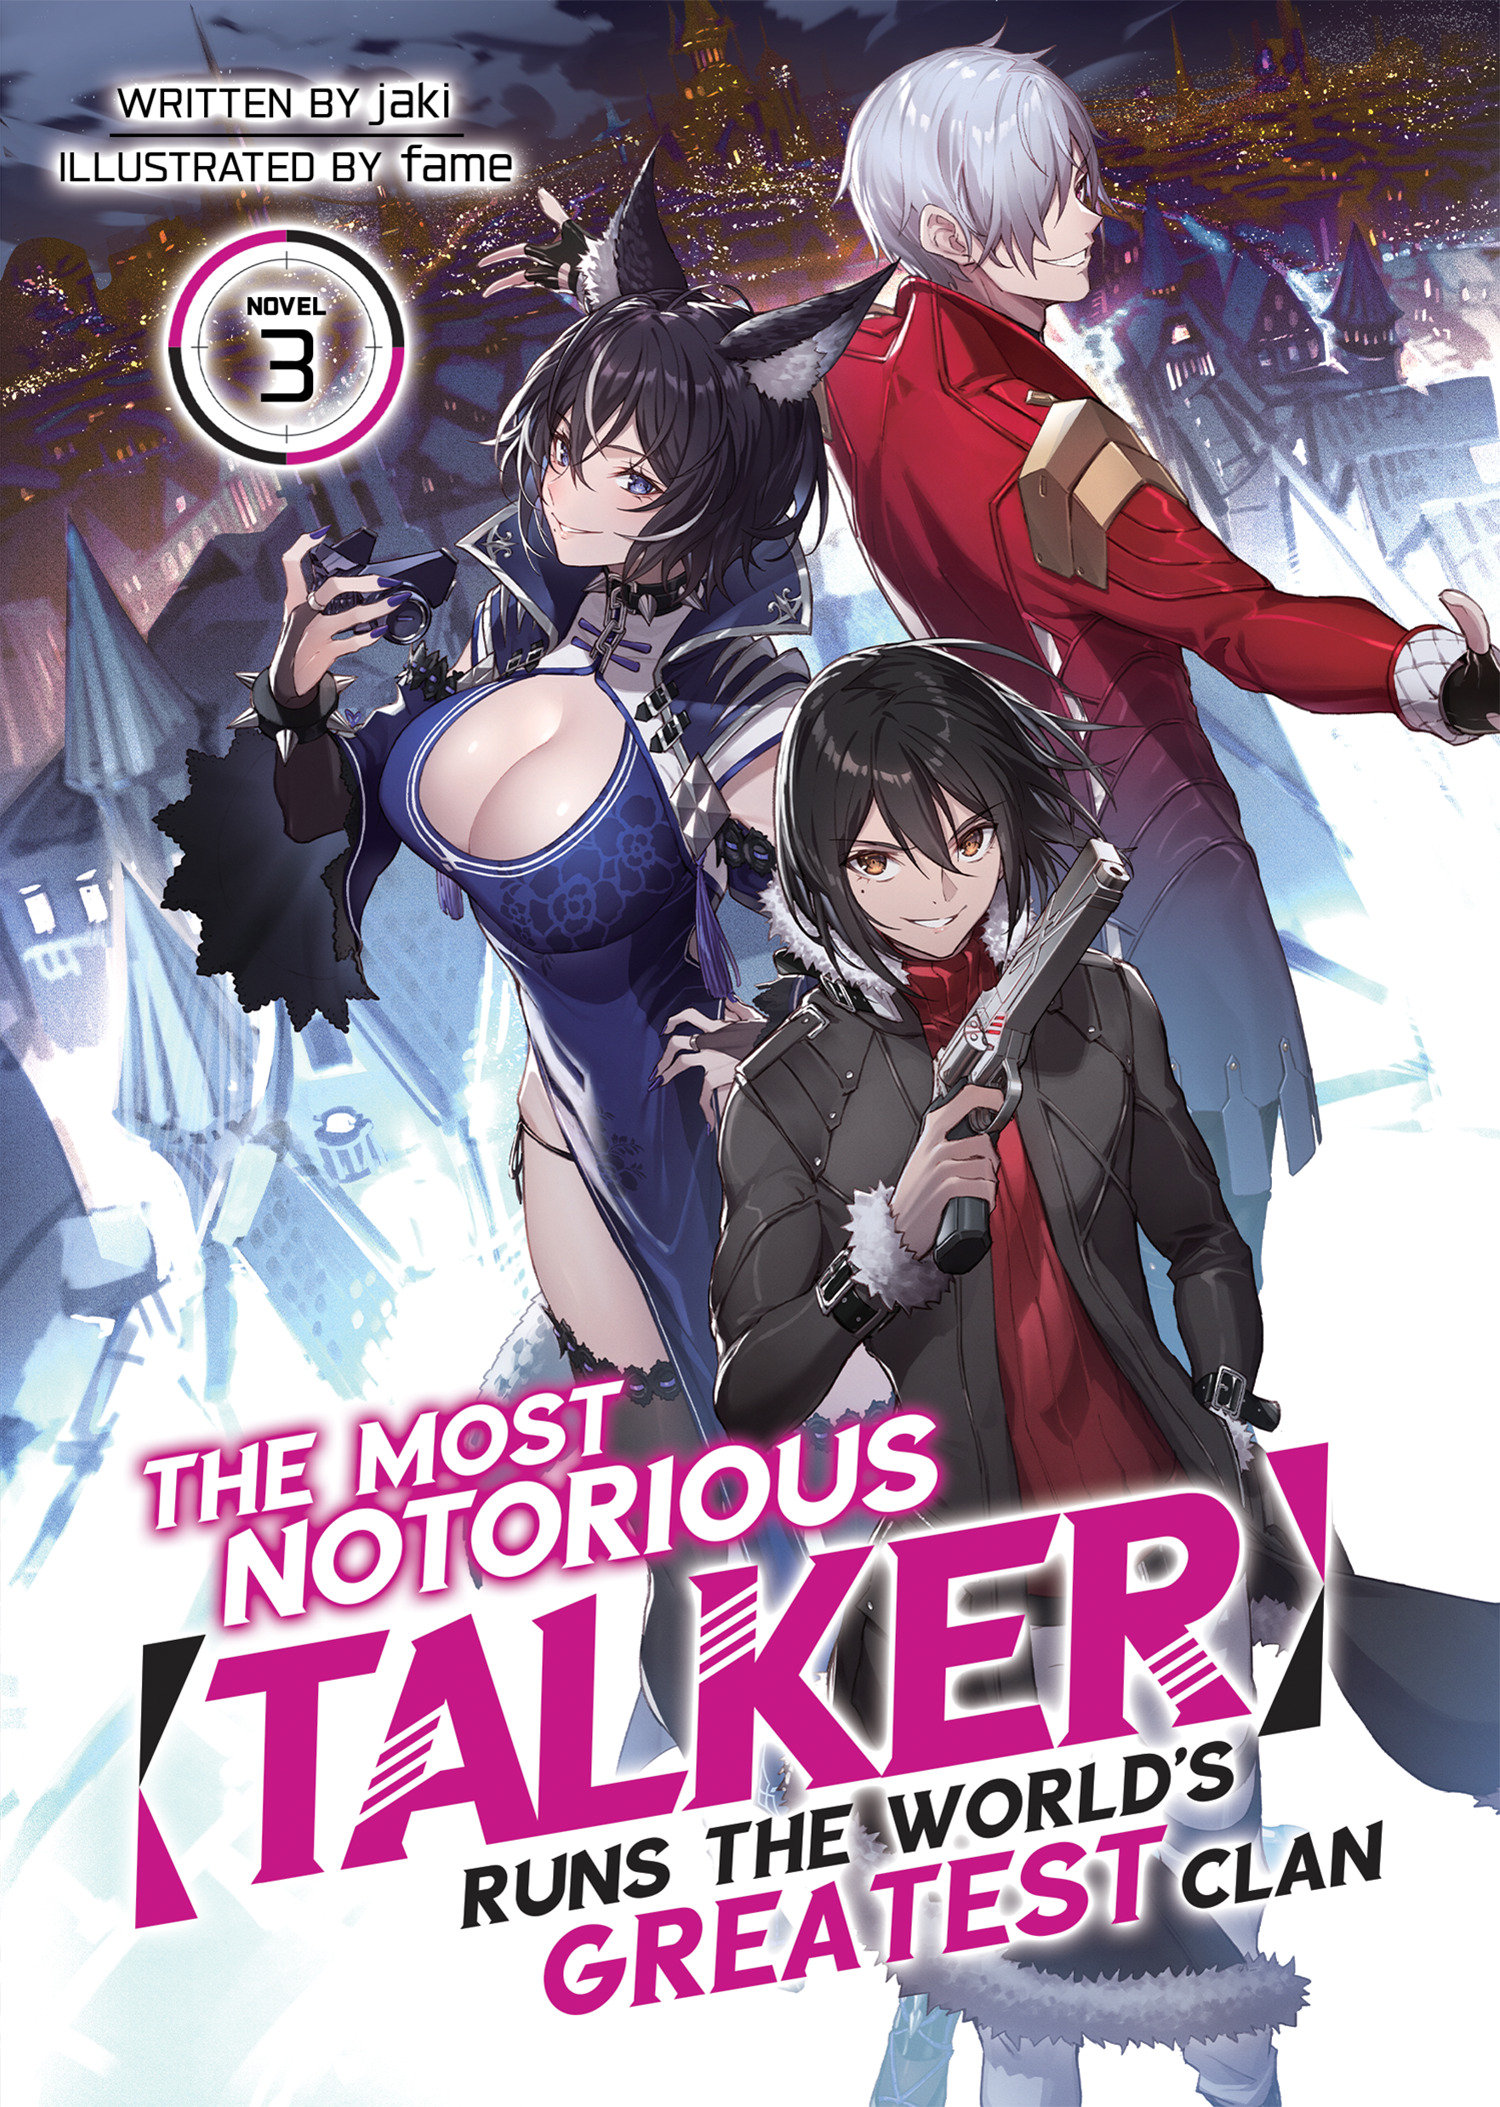 The Most Notorious “Talker” Runs the World’s Greatest Clan Light Novel Volume 3